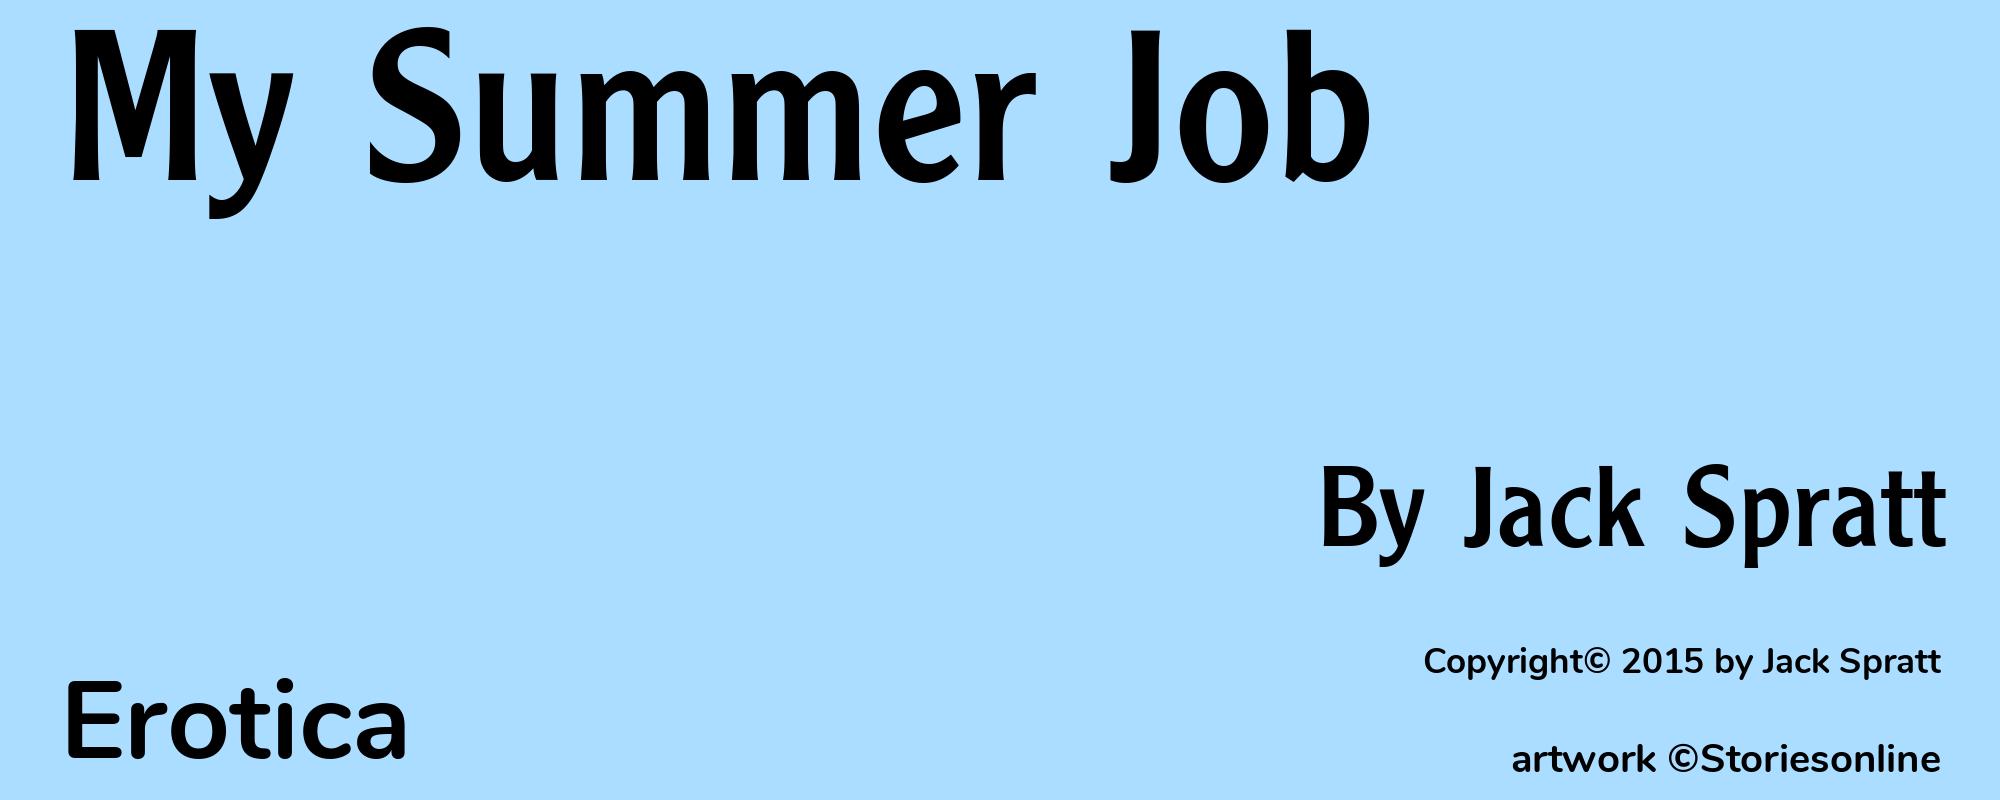 My Summer Job - Cover